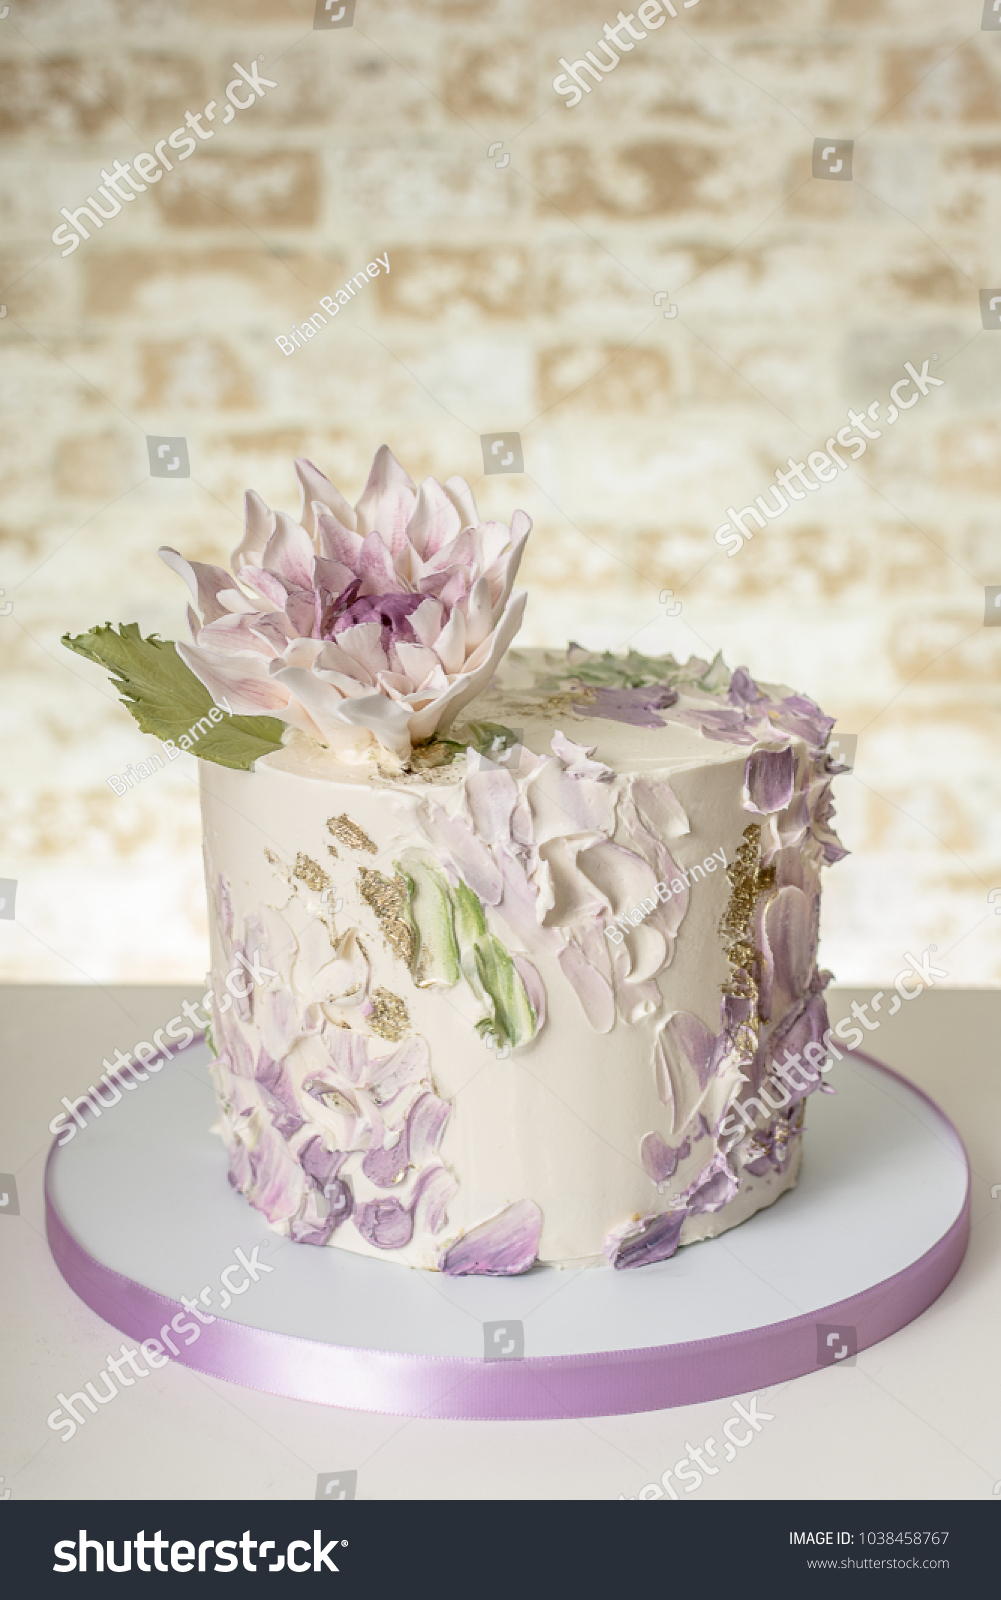 Artistic Wedding Cake Edible Dahlia Flower Food And Drink Stock Image 1038458767